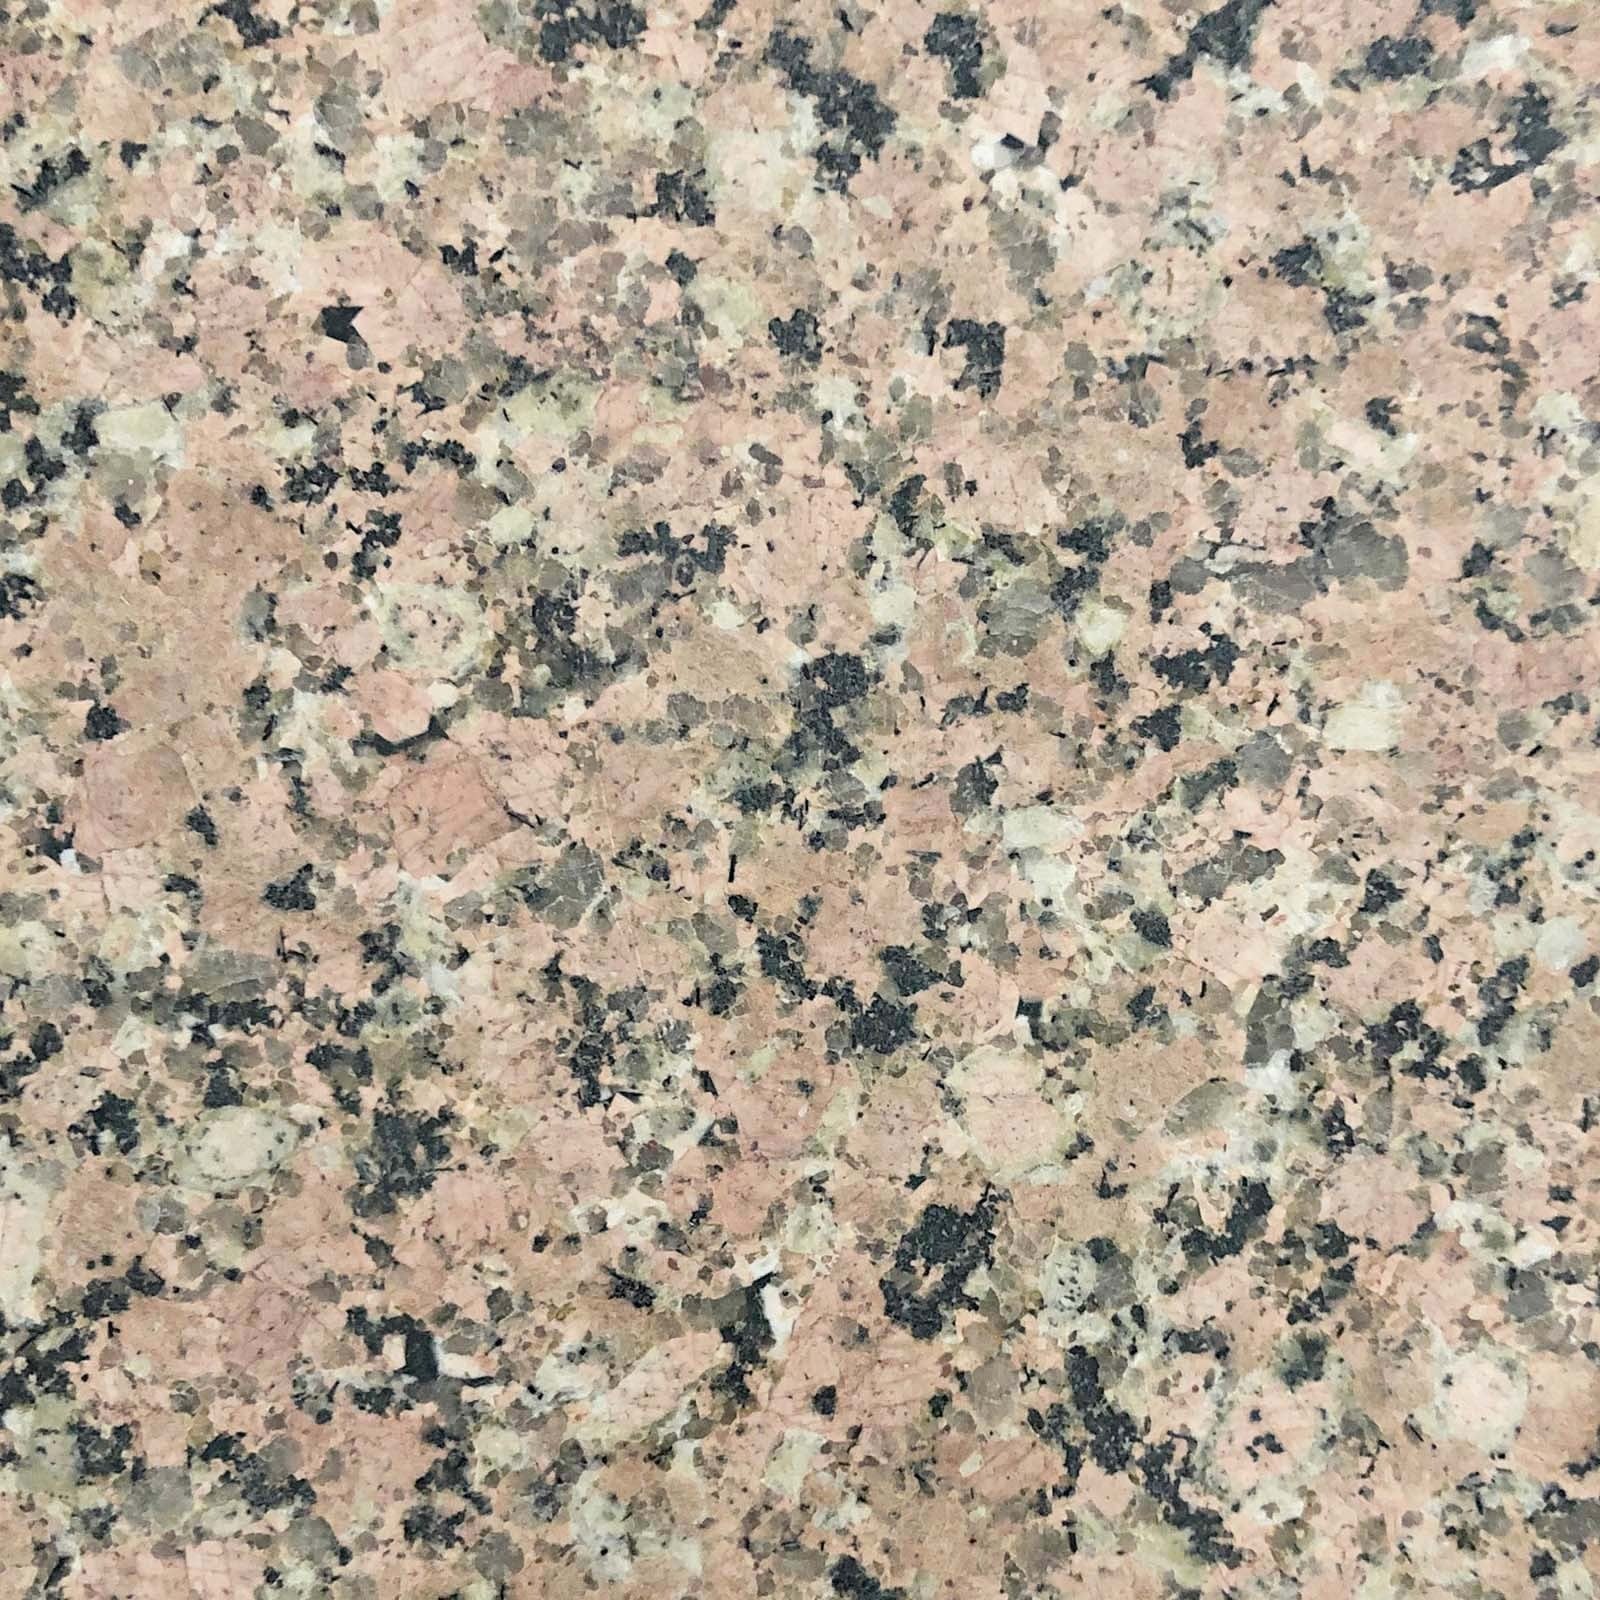 Crystal Pink Granite